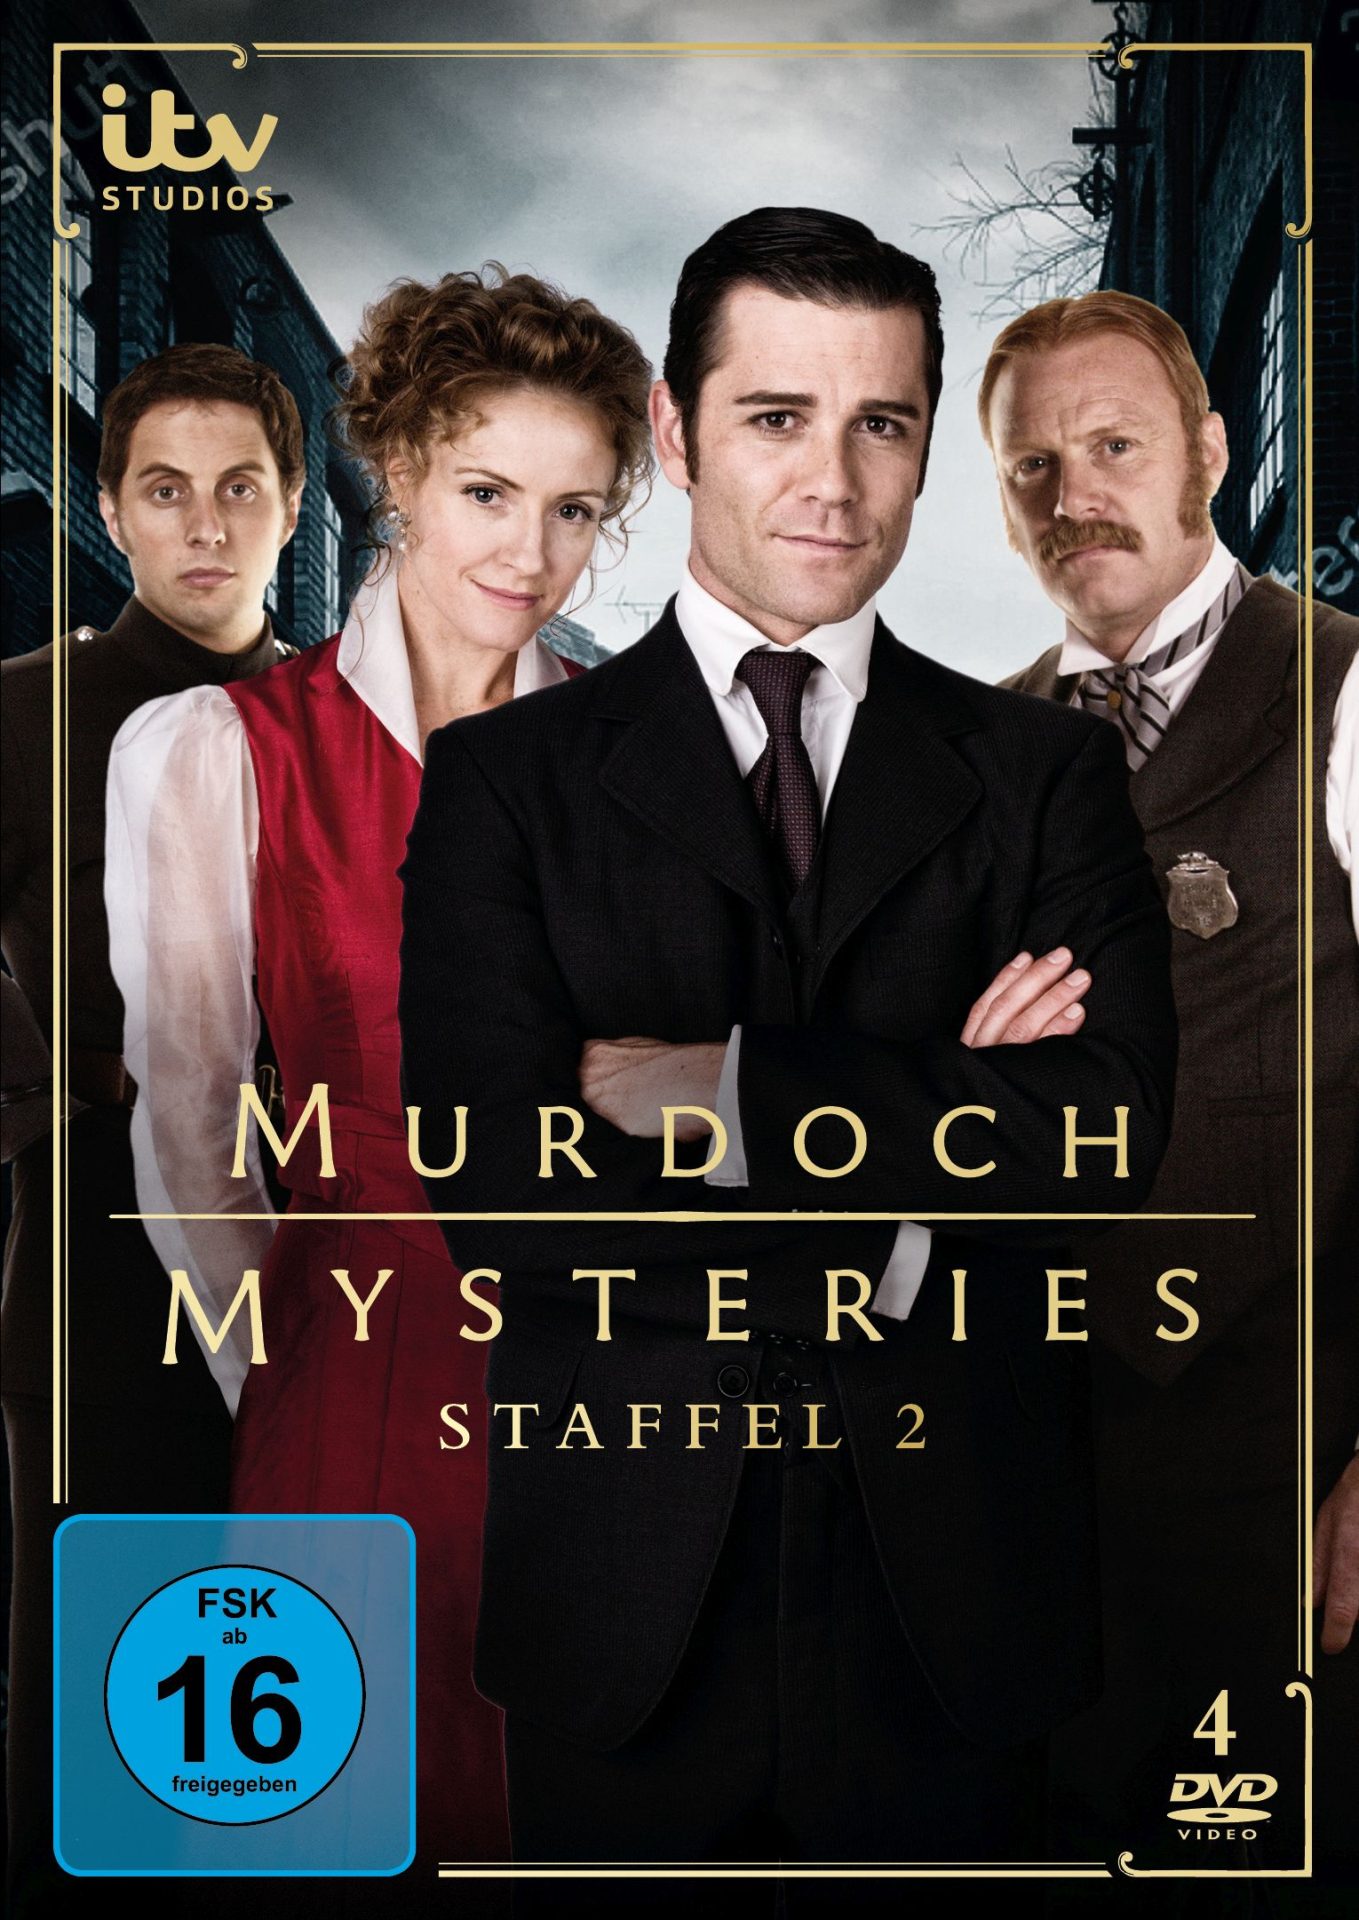 Murdoch Mysteries "Auf den Spuren mysteriöser Mordfälle" - Staffel 2